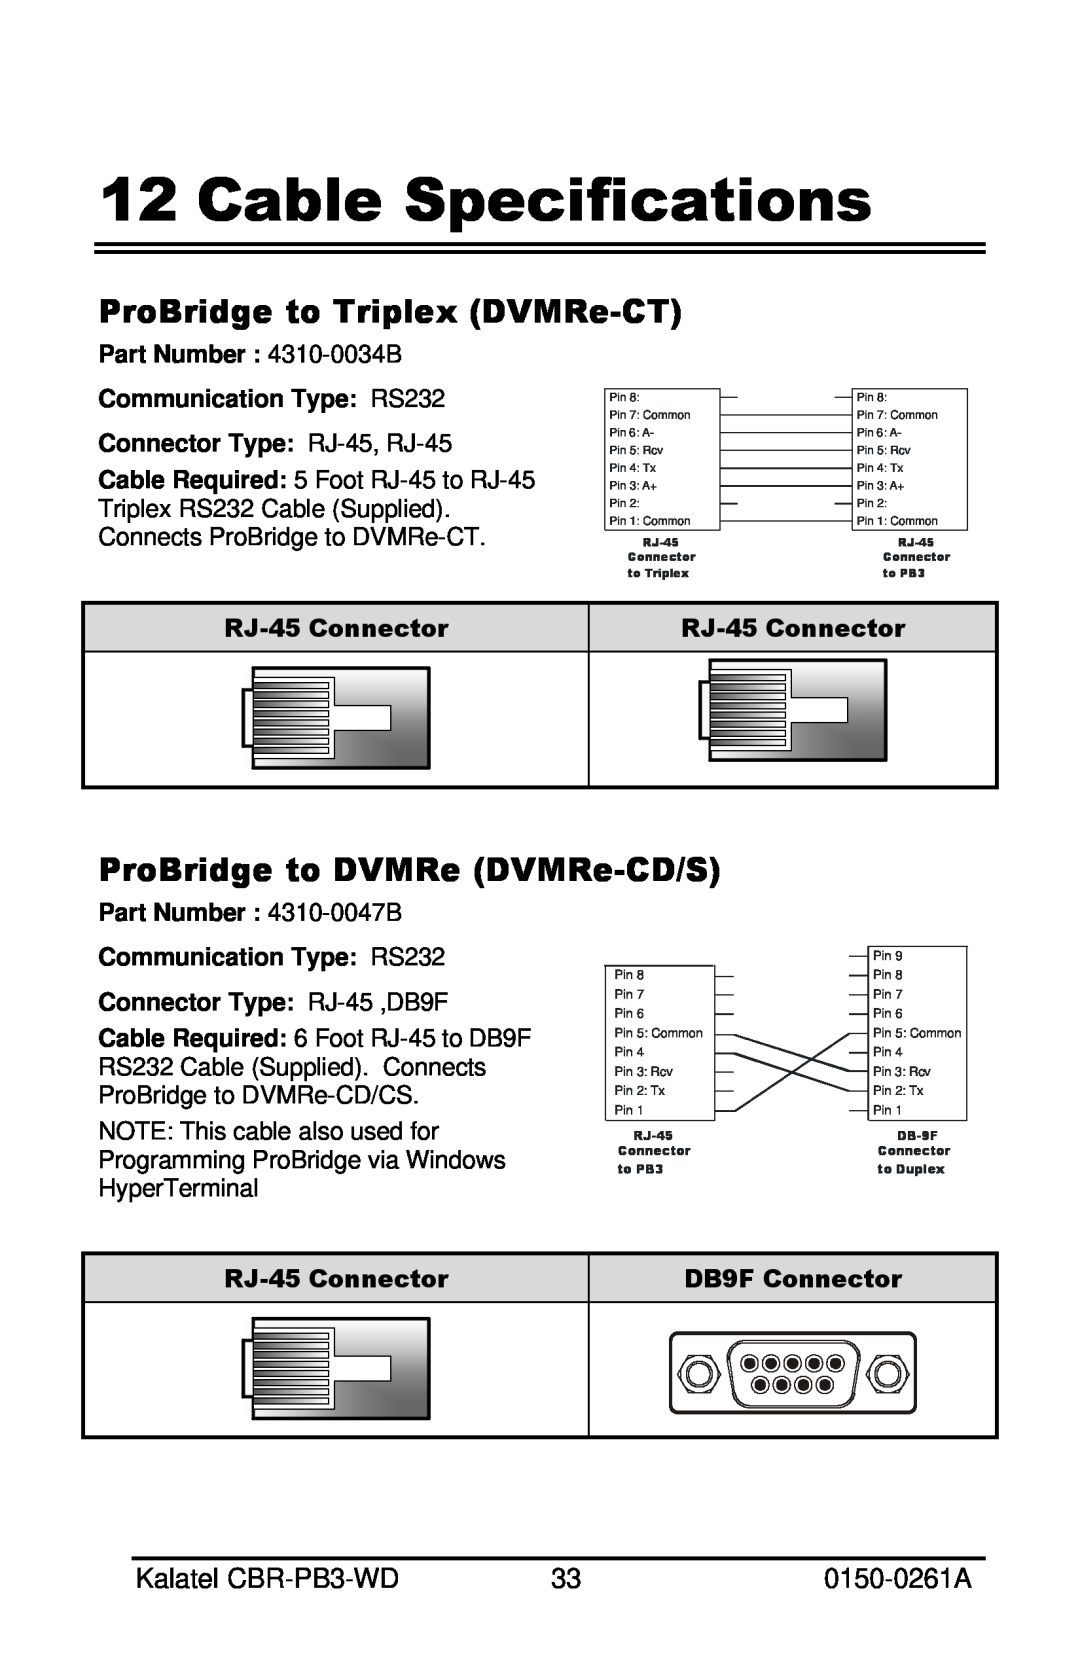 GE CBR-PB3-WD installation manual Cable Specifications, ProBridge to Triplex DVMRe-CT, ProBridge to DVMRe DVMRe-CD/S 